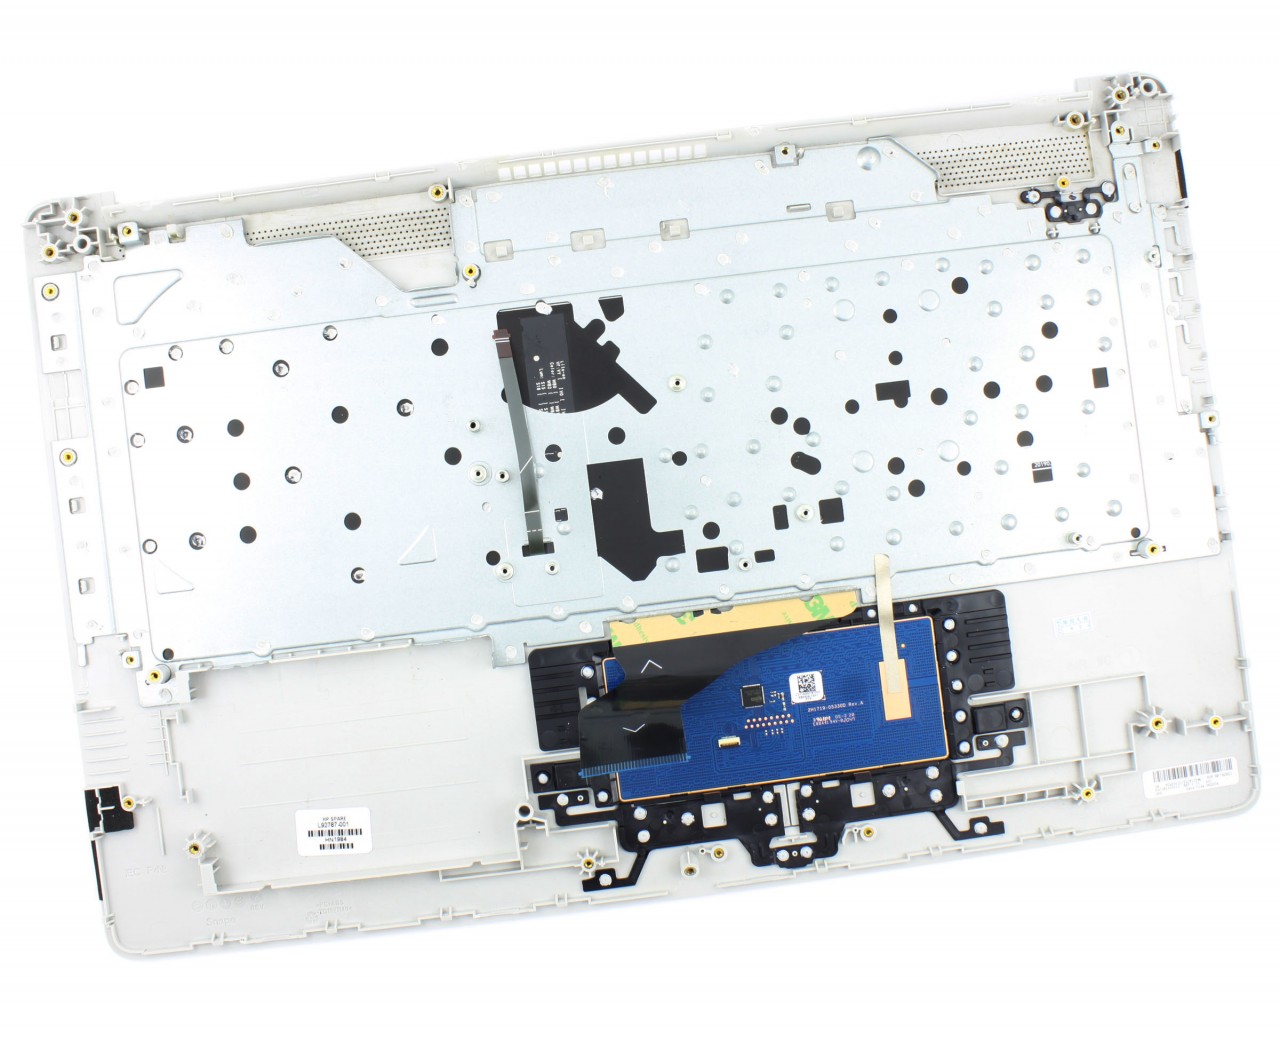 Tastatura HP L22750-00 Argintie cu Palmrest Argintiu si TouchPad iluminata backlit argintie imagine 2022